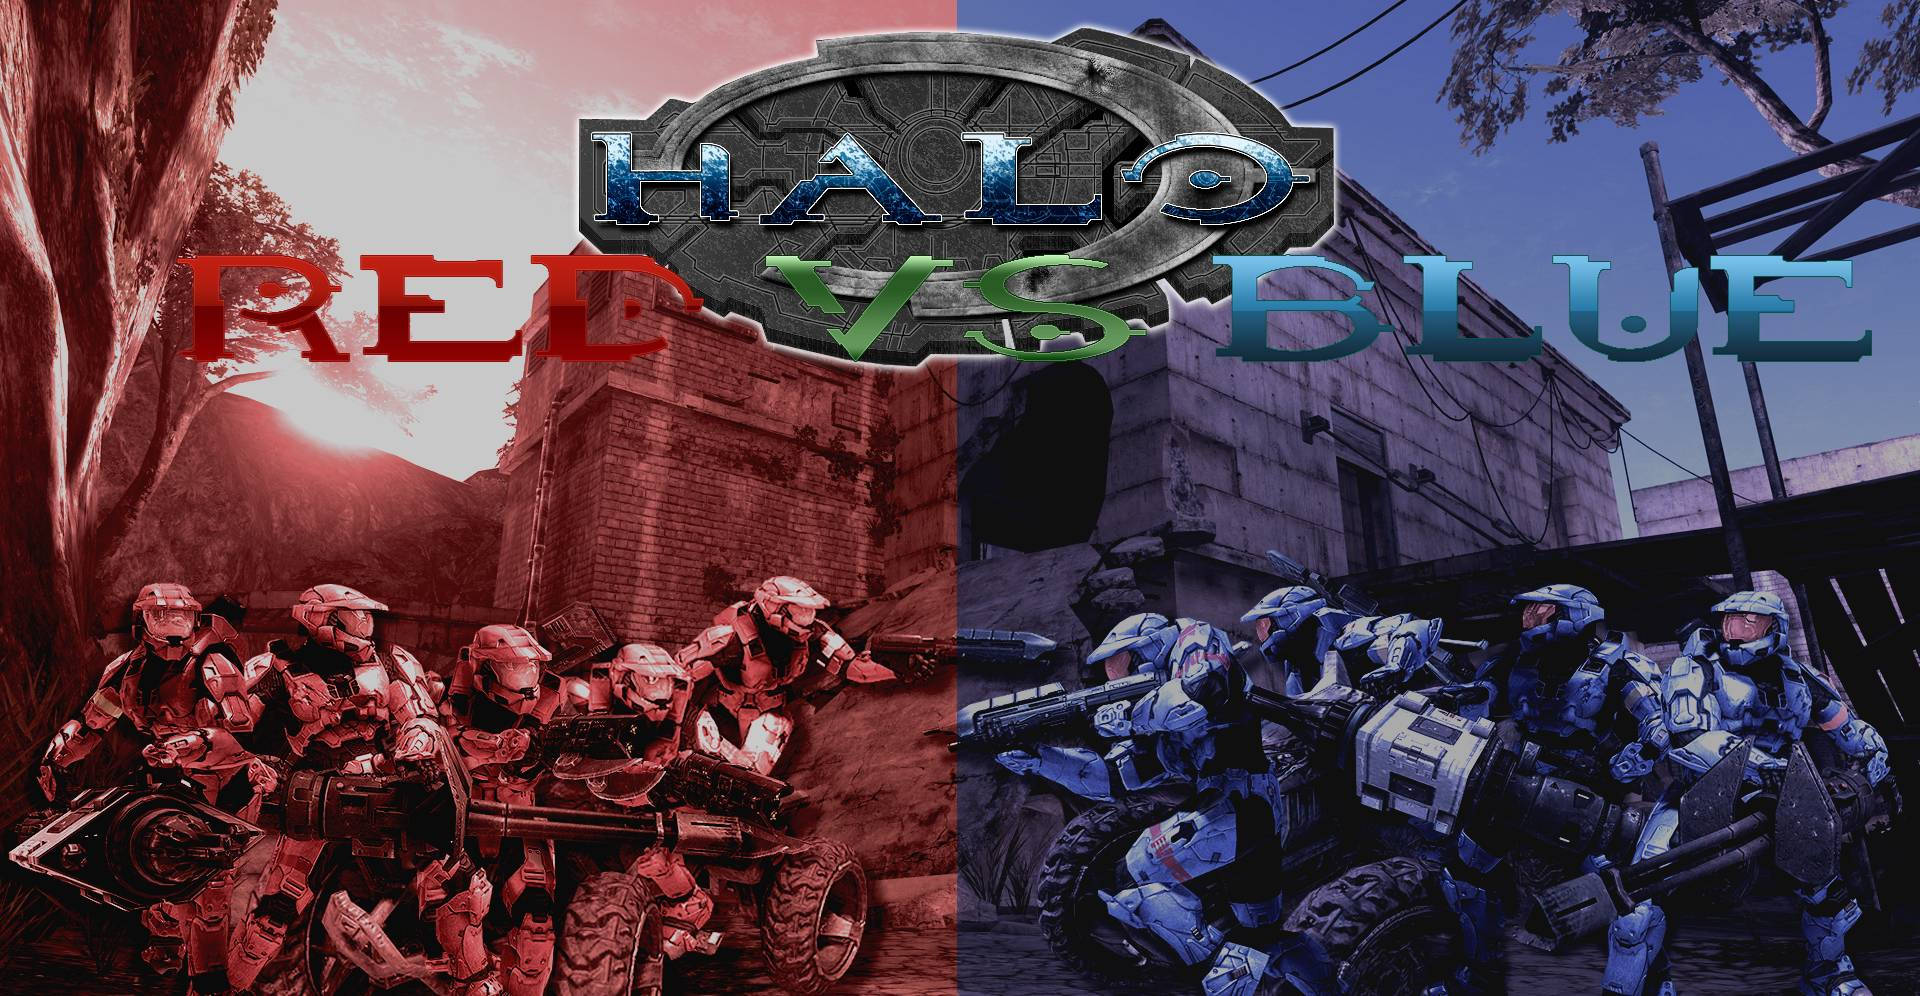 Red Vs Blue Based On Halo Game Wallpaper